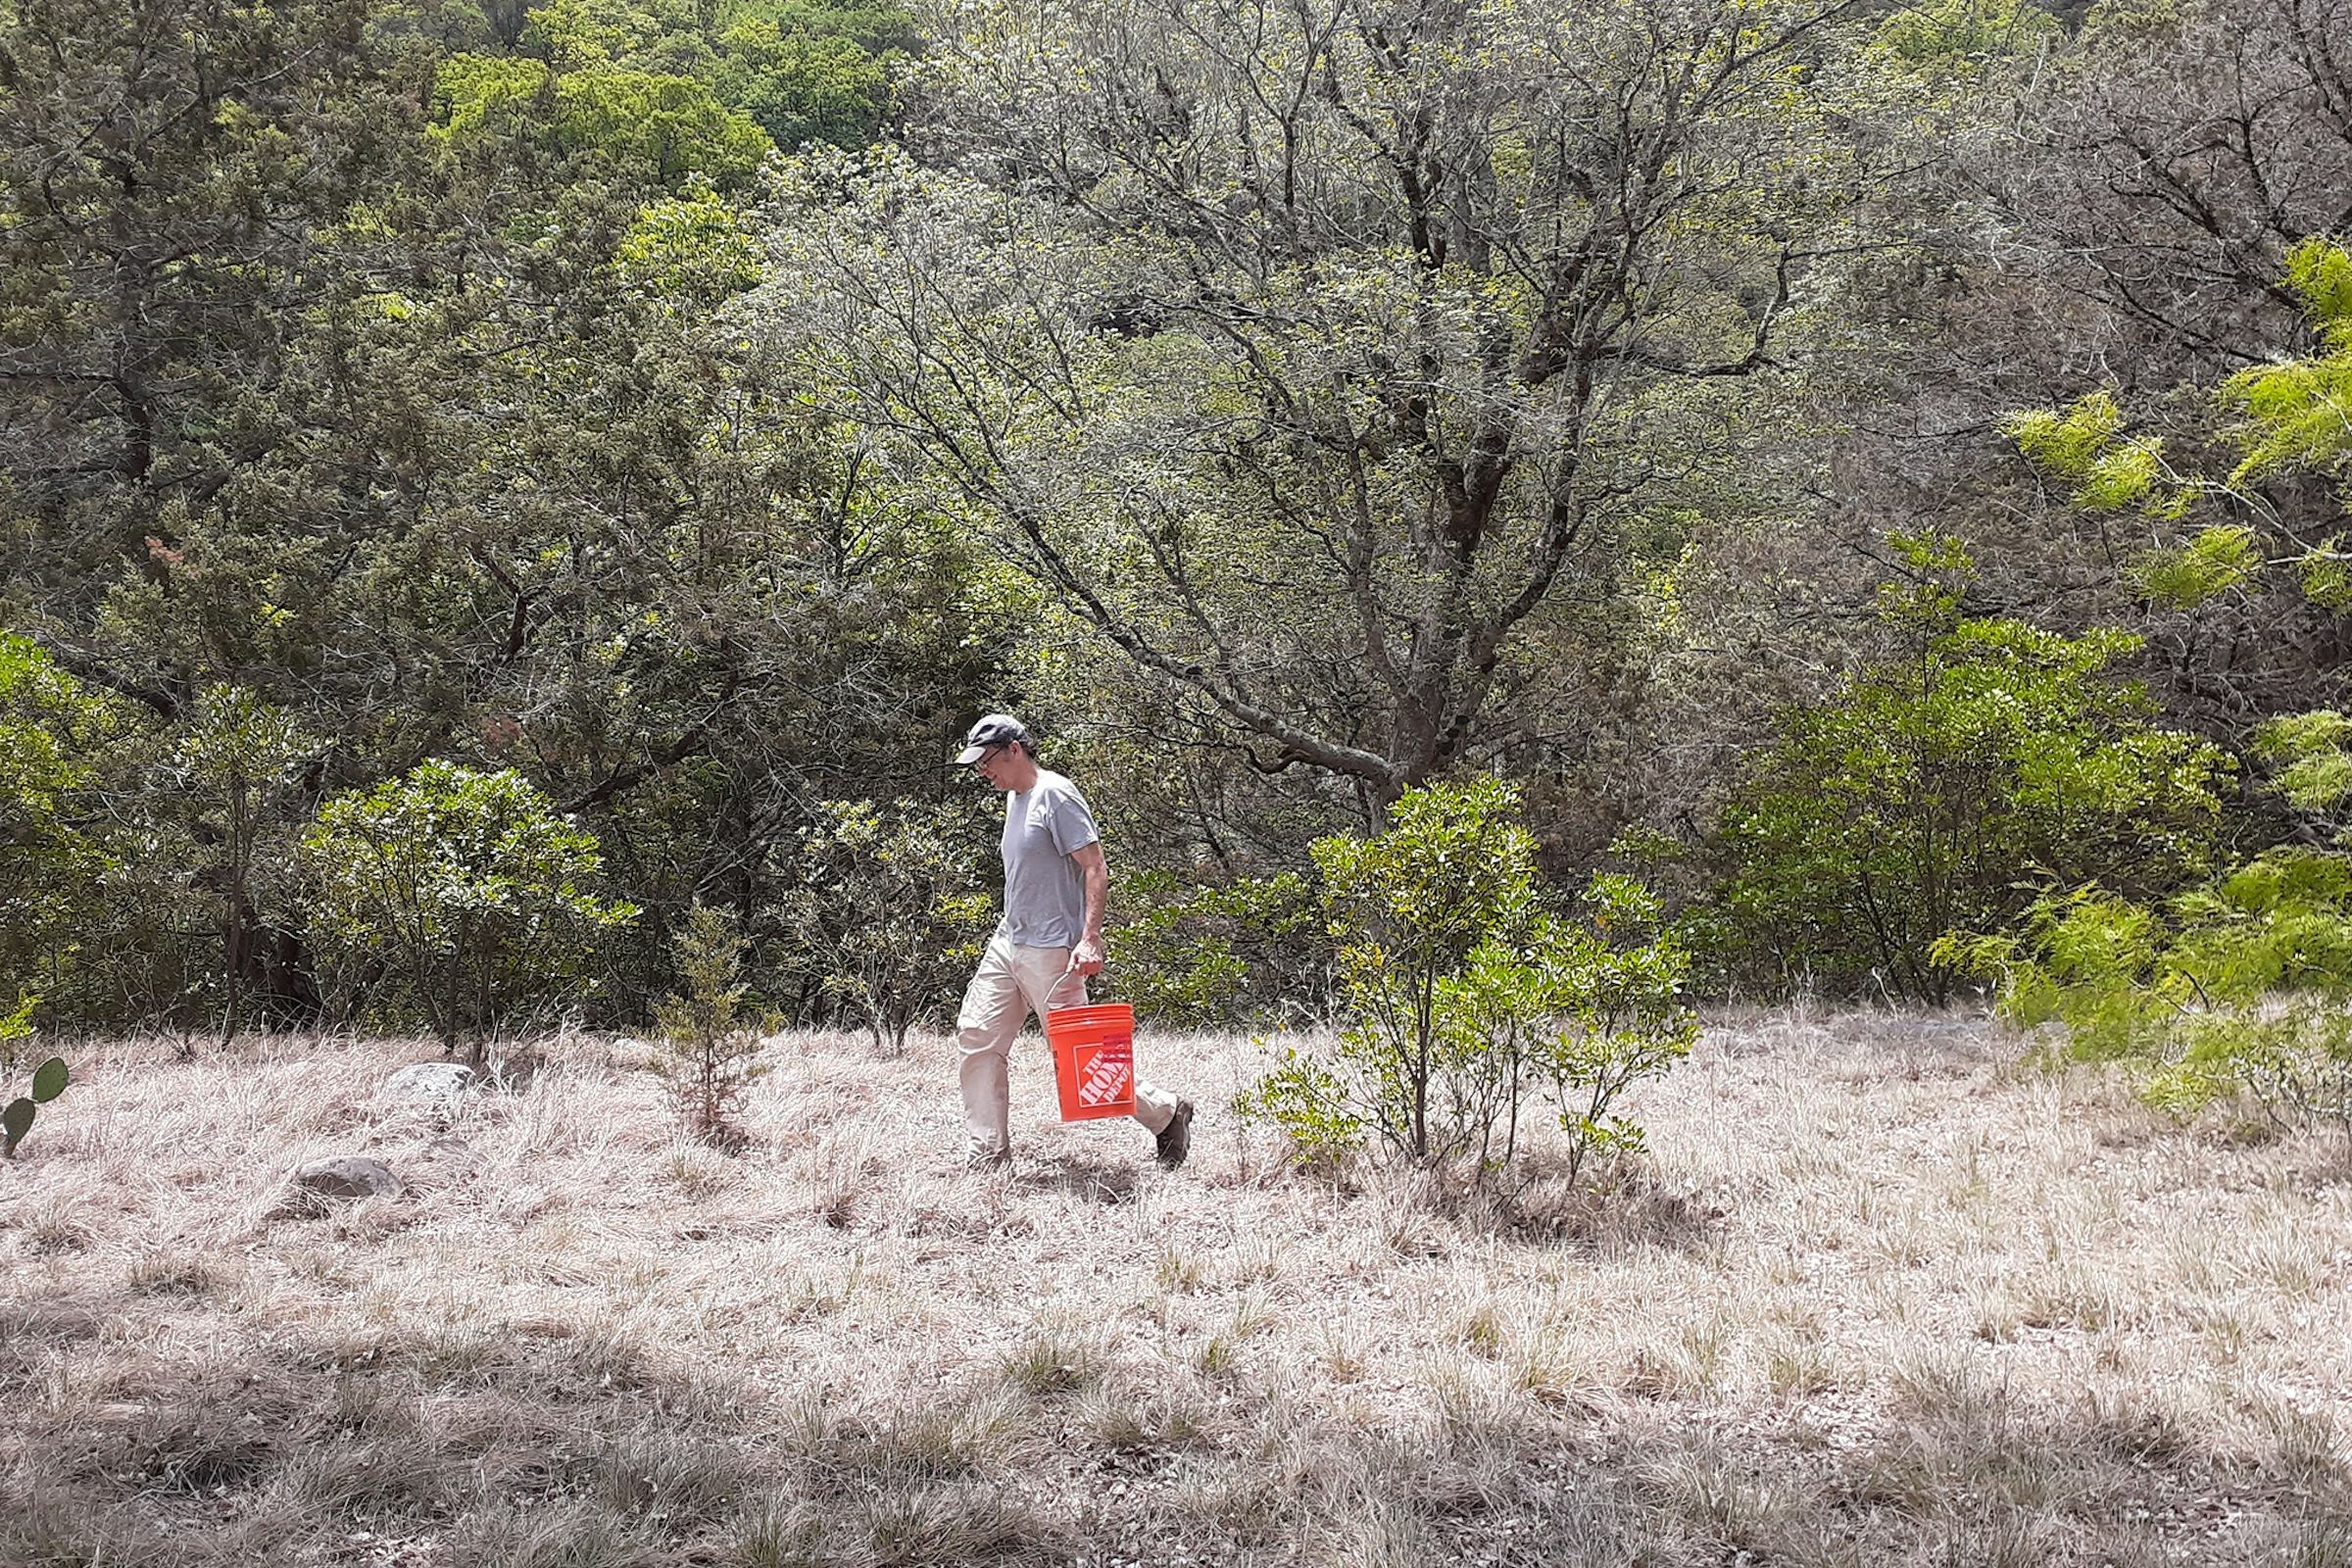 Scientist walking through grass and brush with an orange bucket